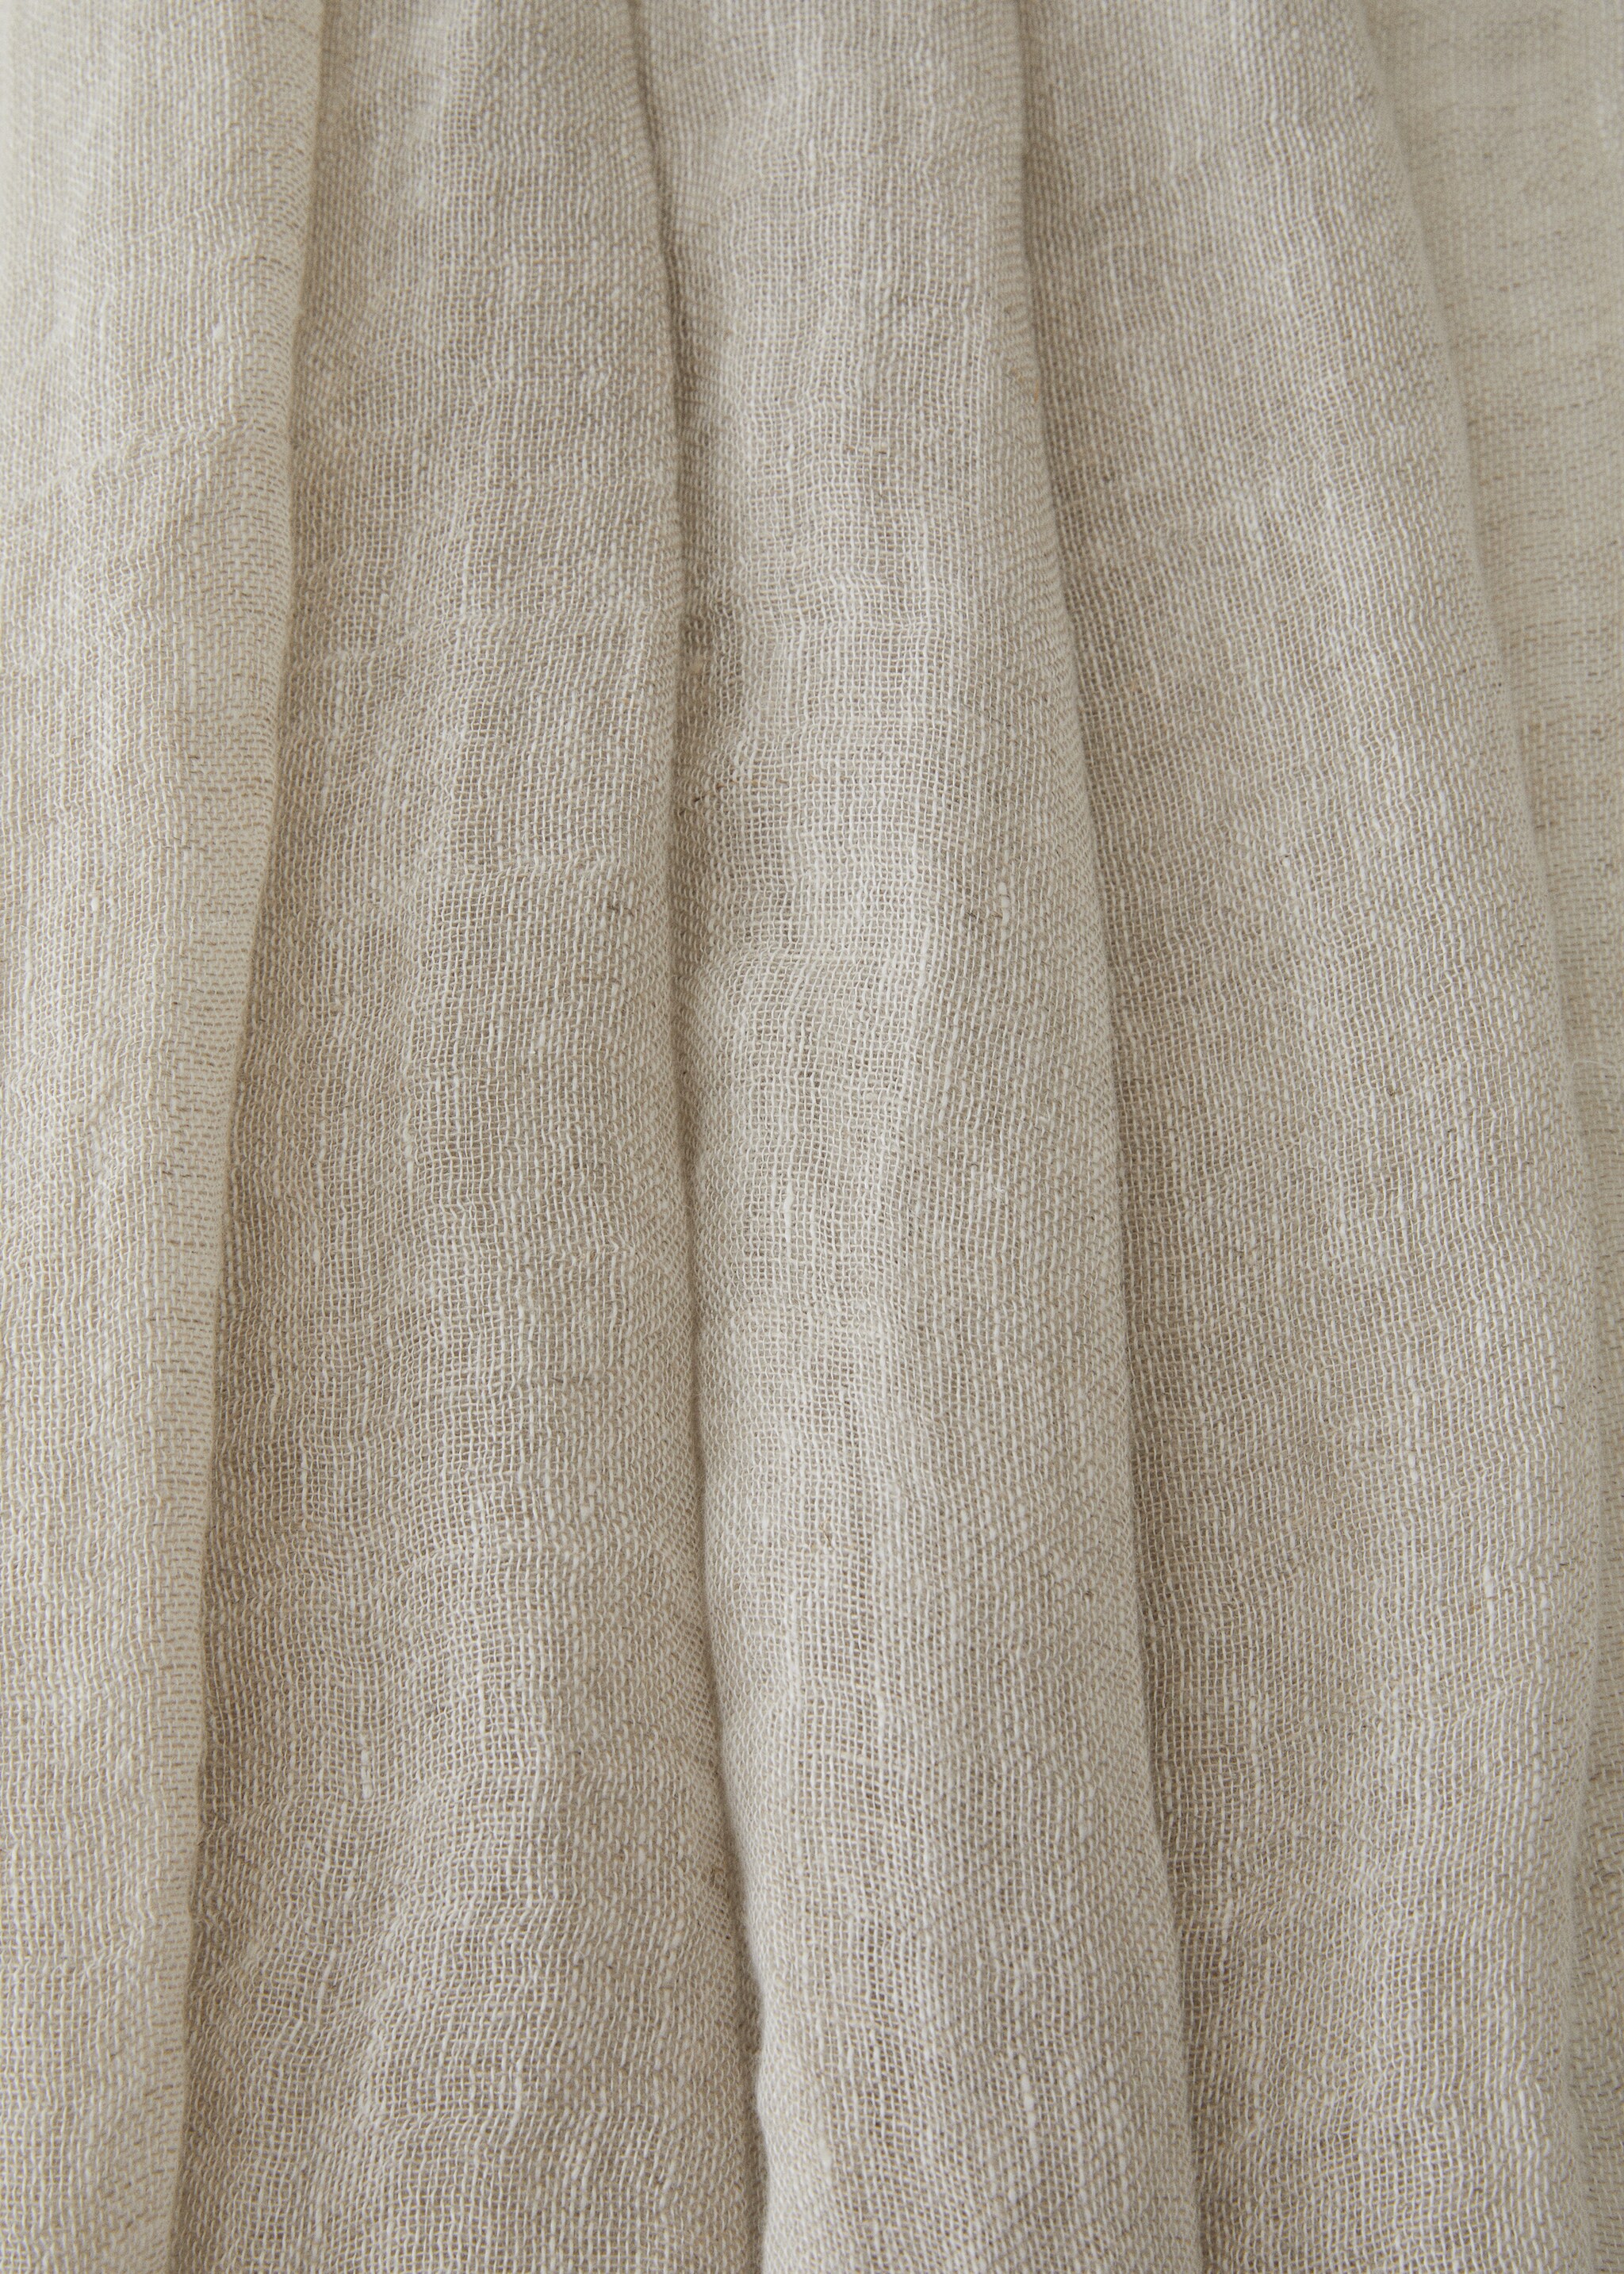 100% curtain linen 145x260cm - Details of the article 3